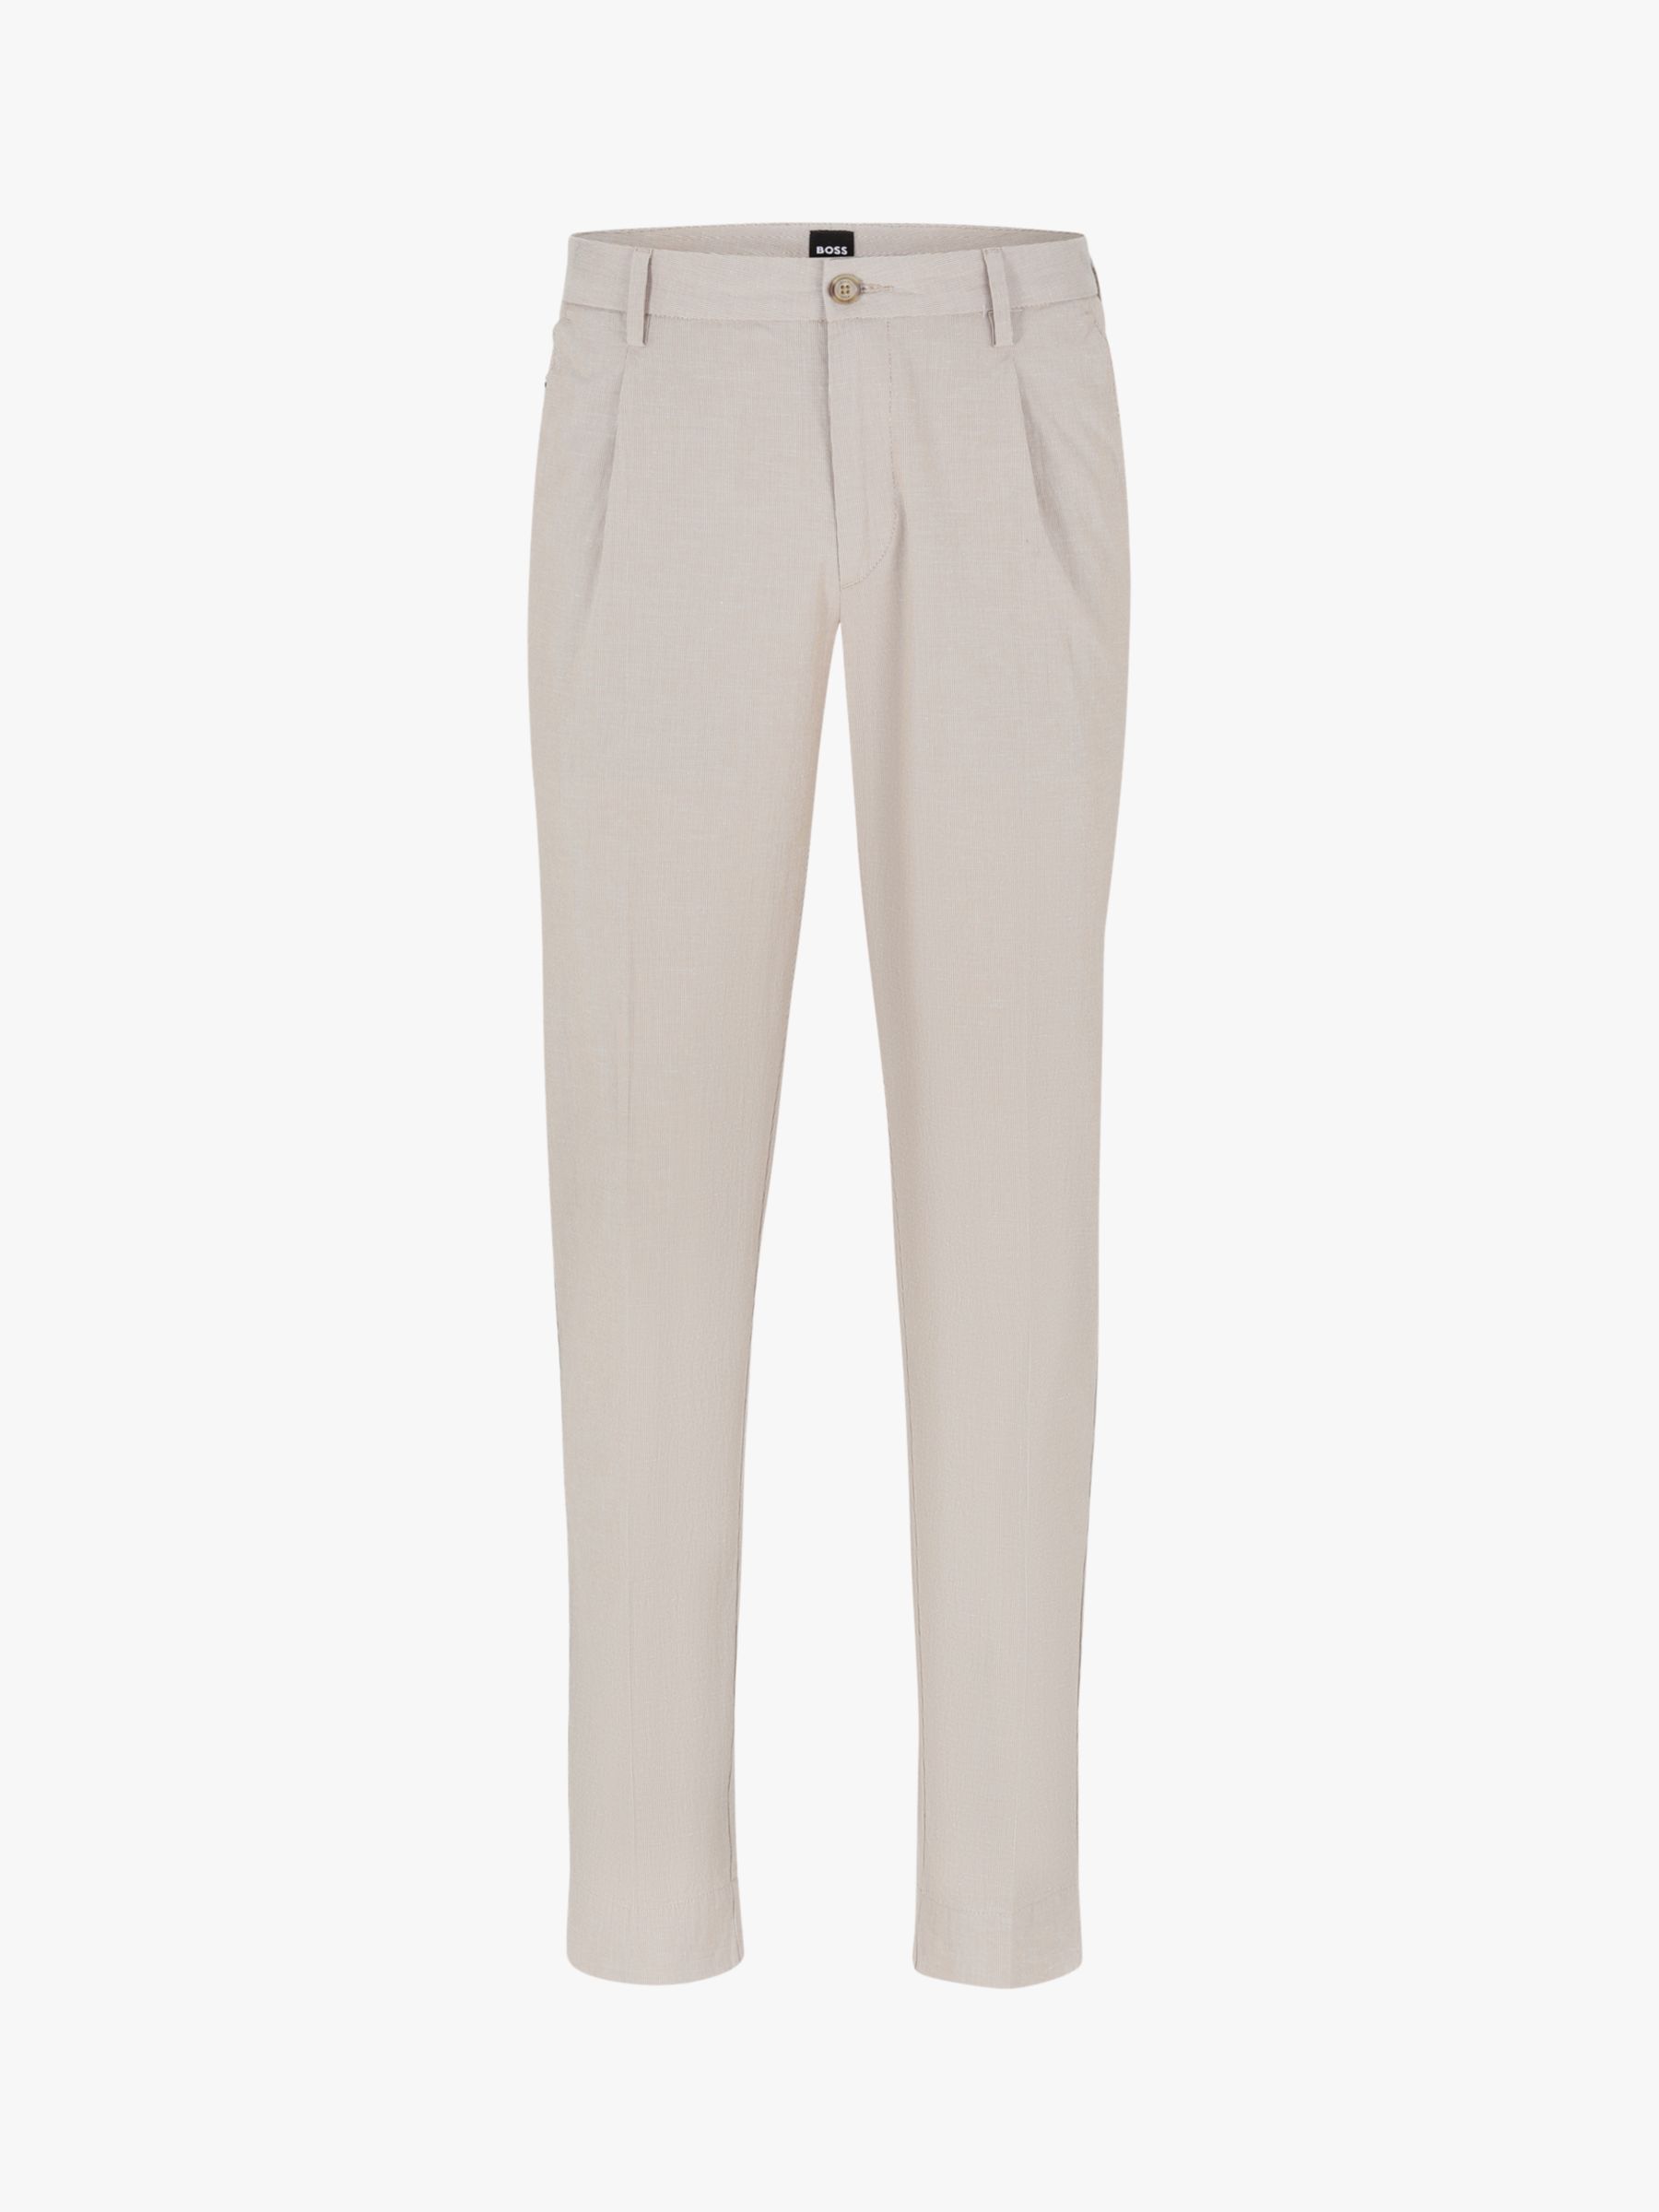 BOSS Kaito Linen Blend Slim Fit Trousers, Medium Beige, 34L